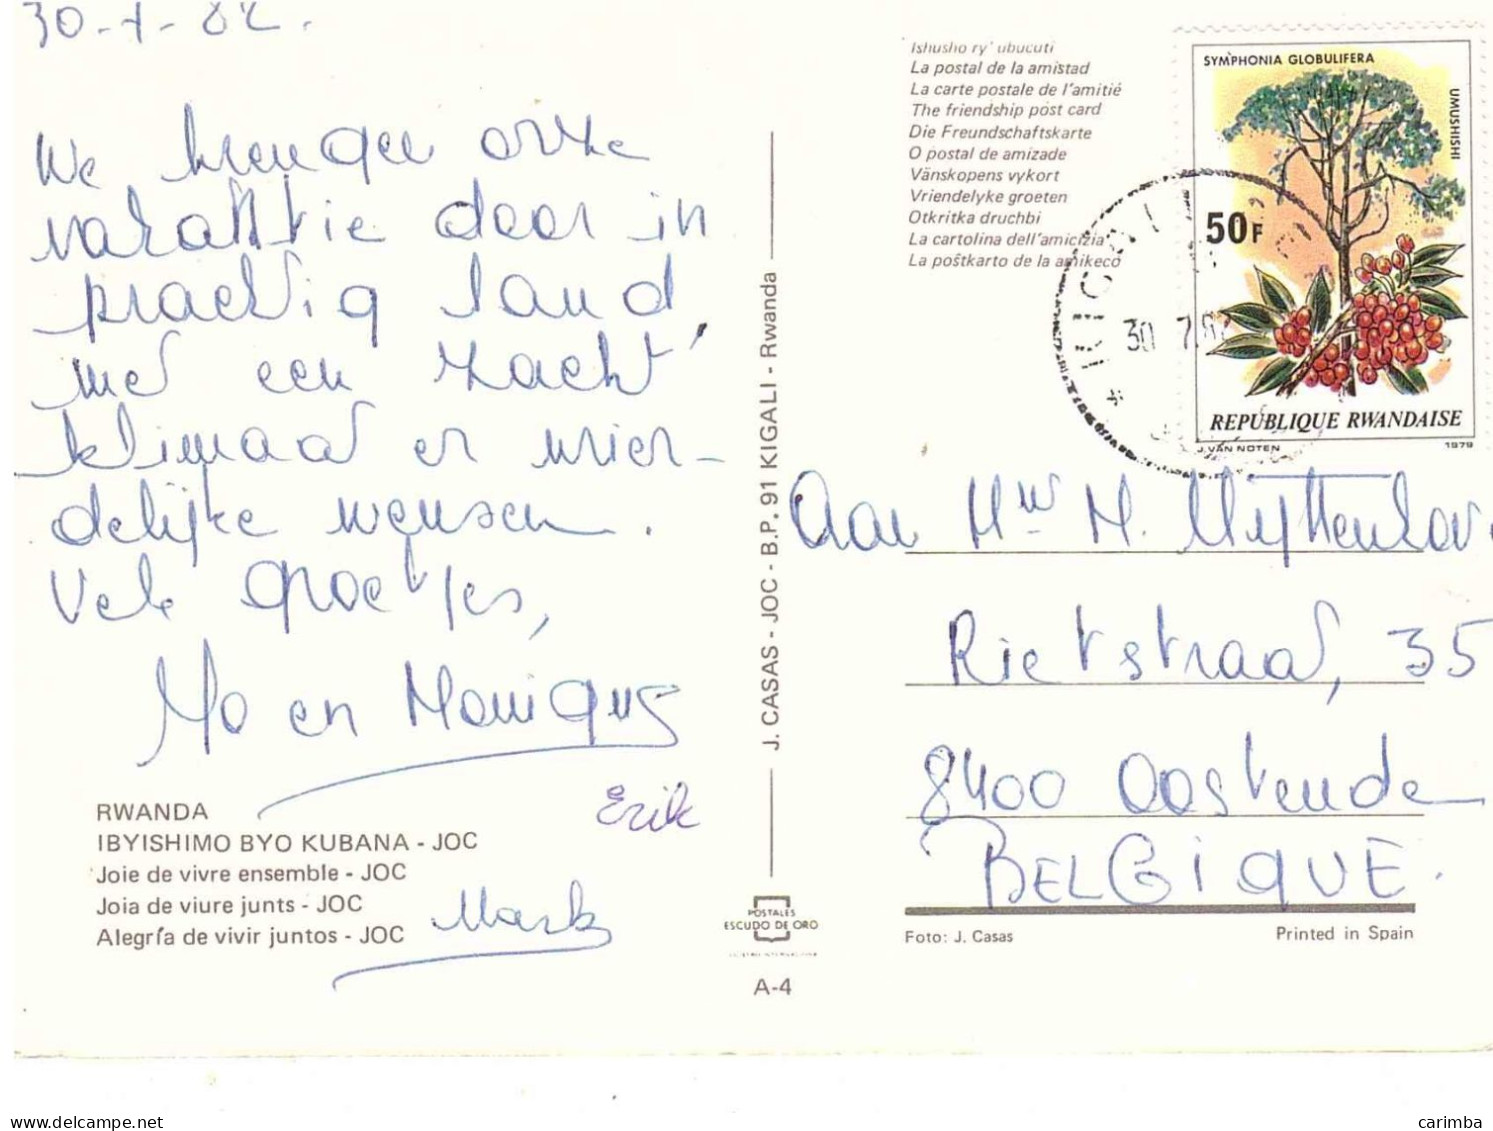 RWANDA SYMPHONIA GLOBULIFERA CARTOLINA PER BELGIO - Lettres & Documents